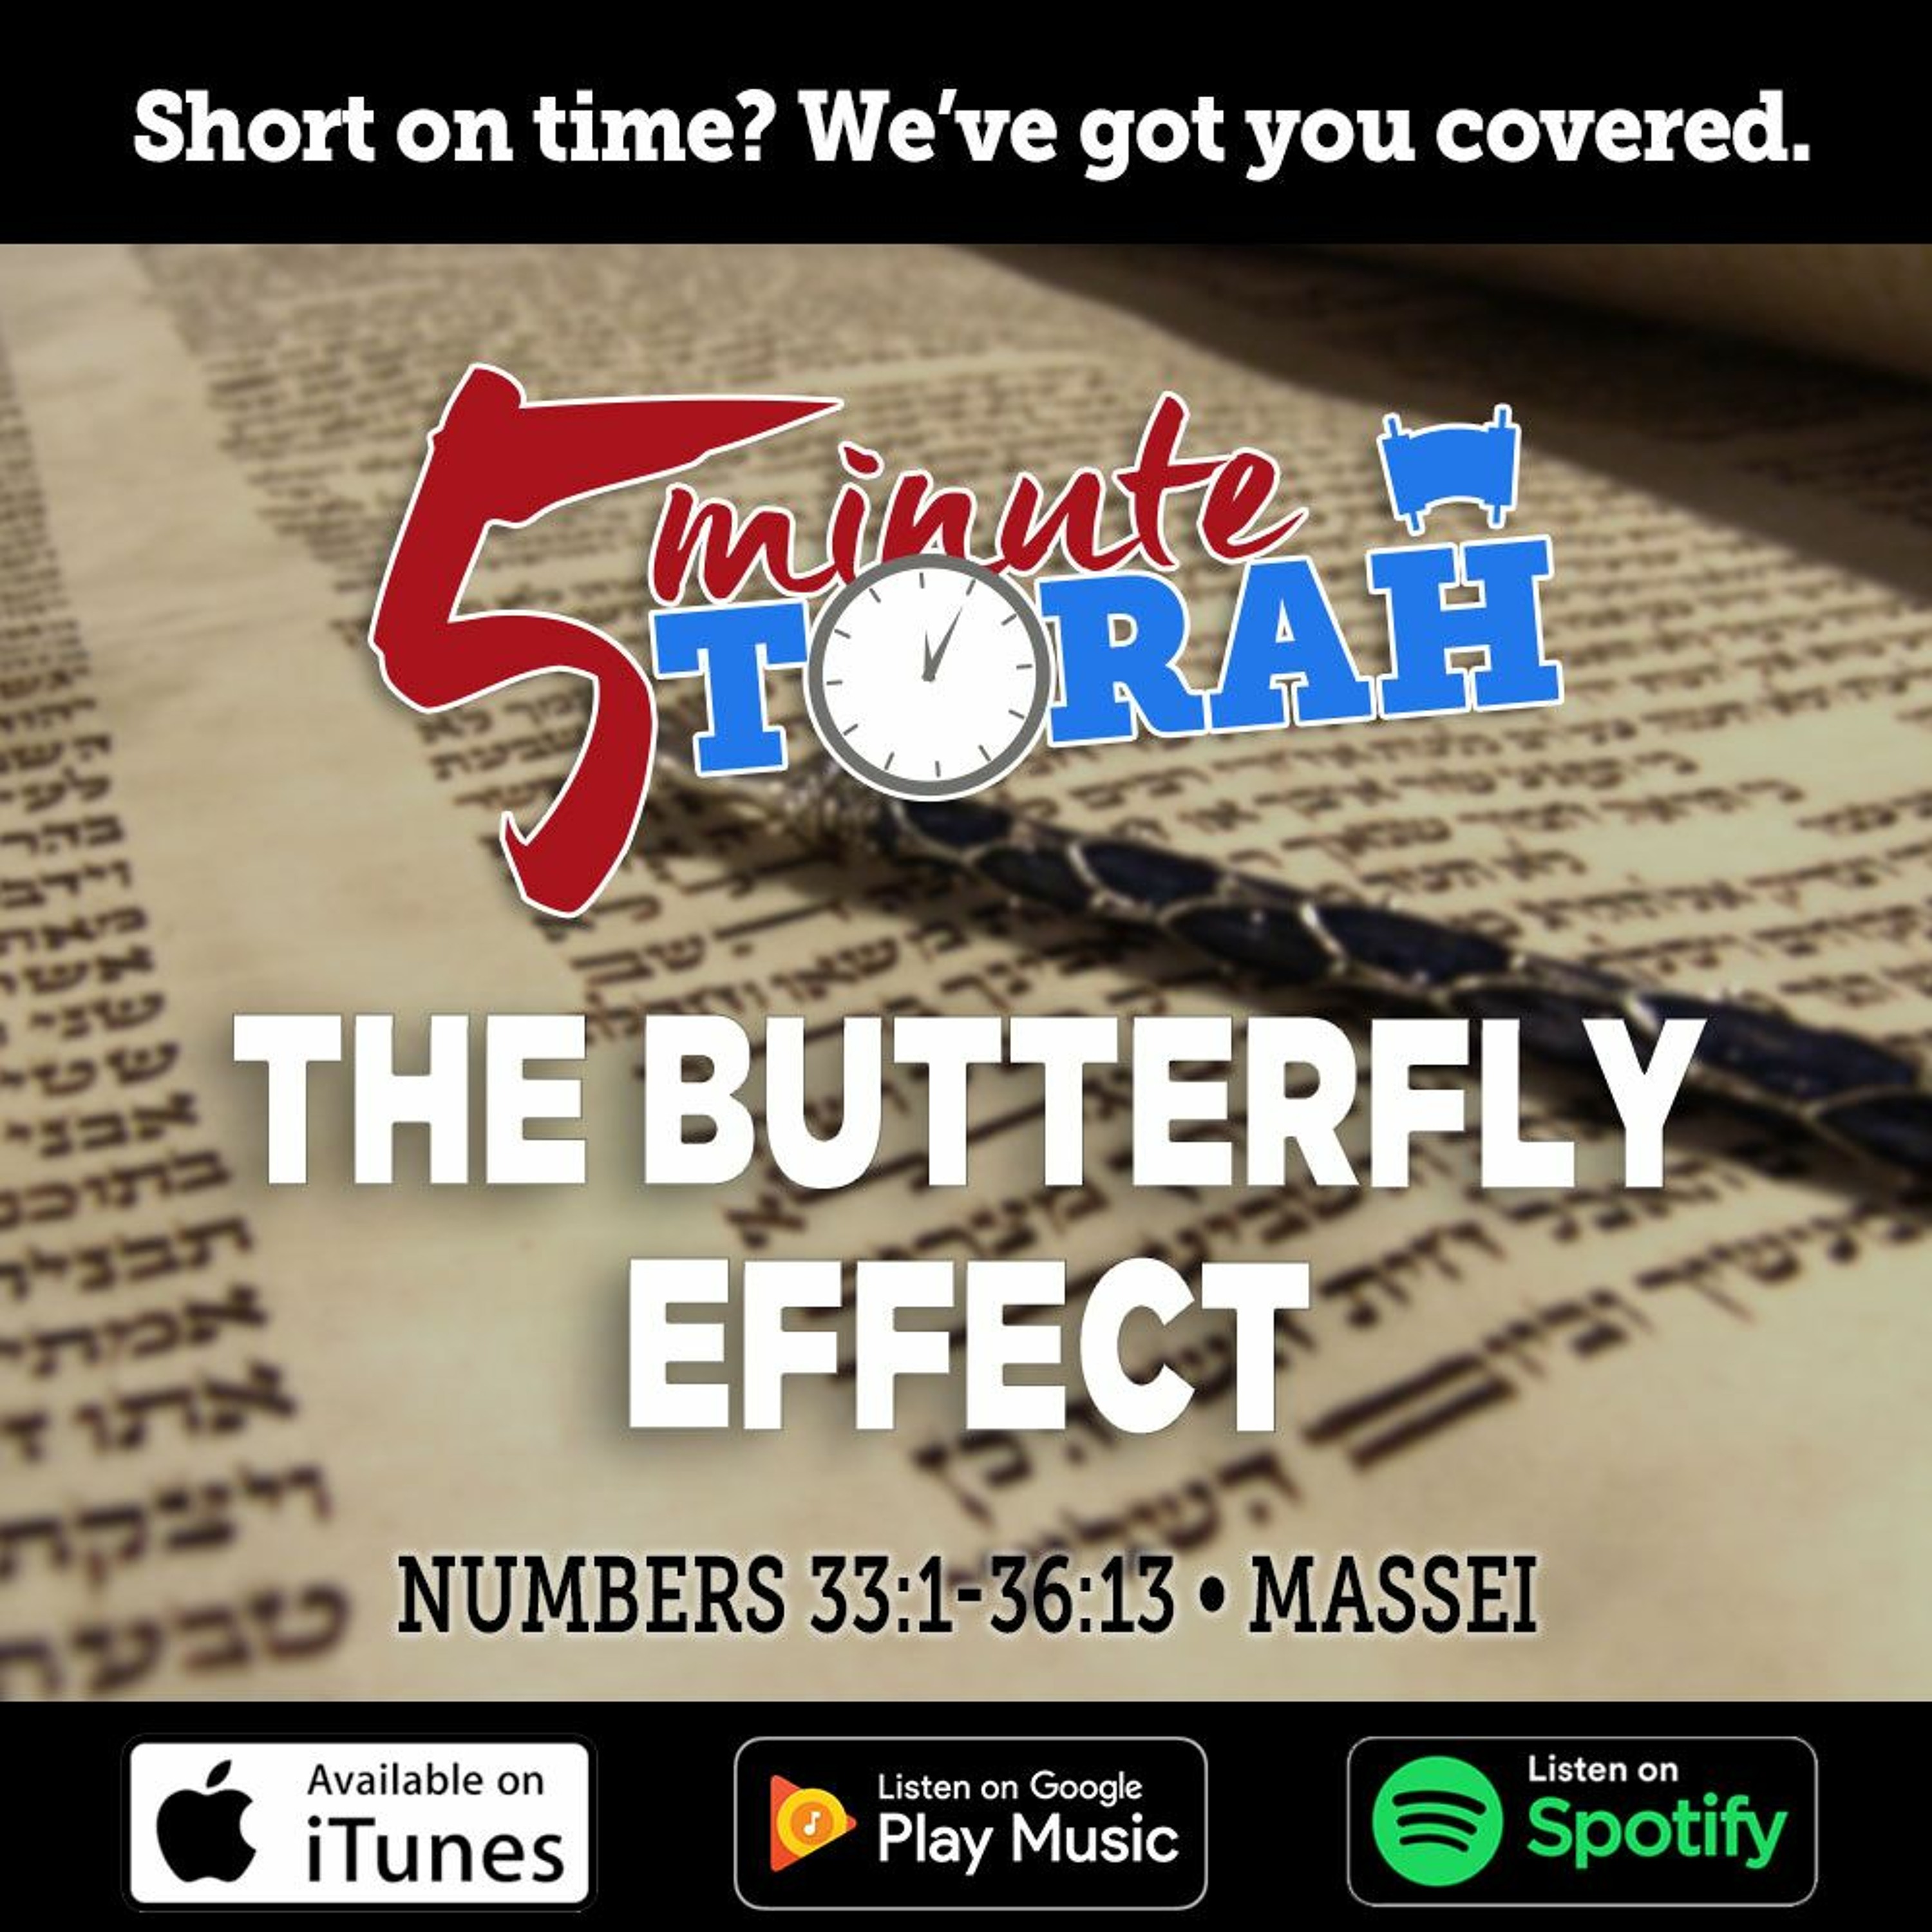 Massei - The Butterfly Effect